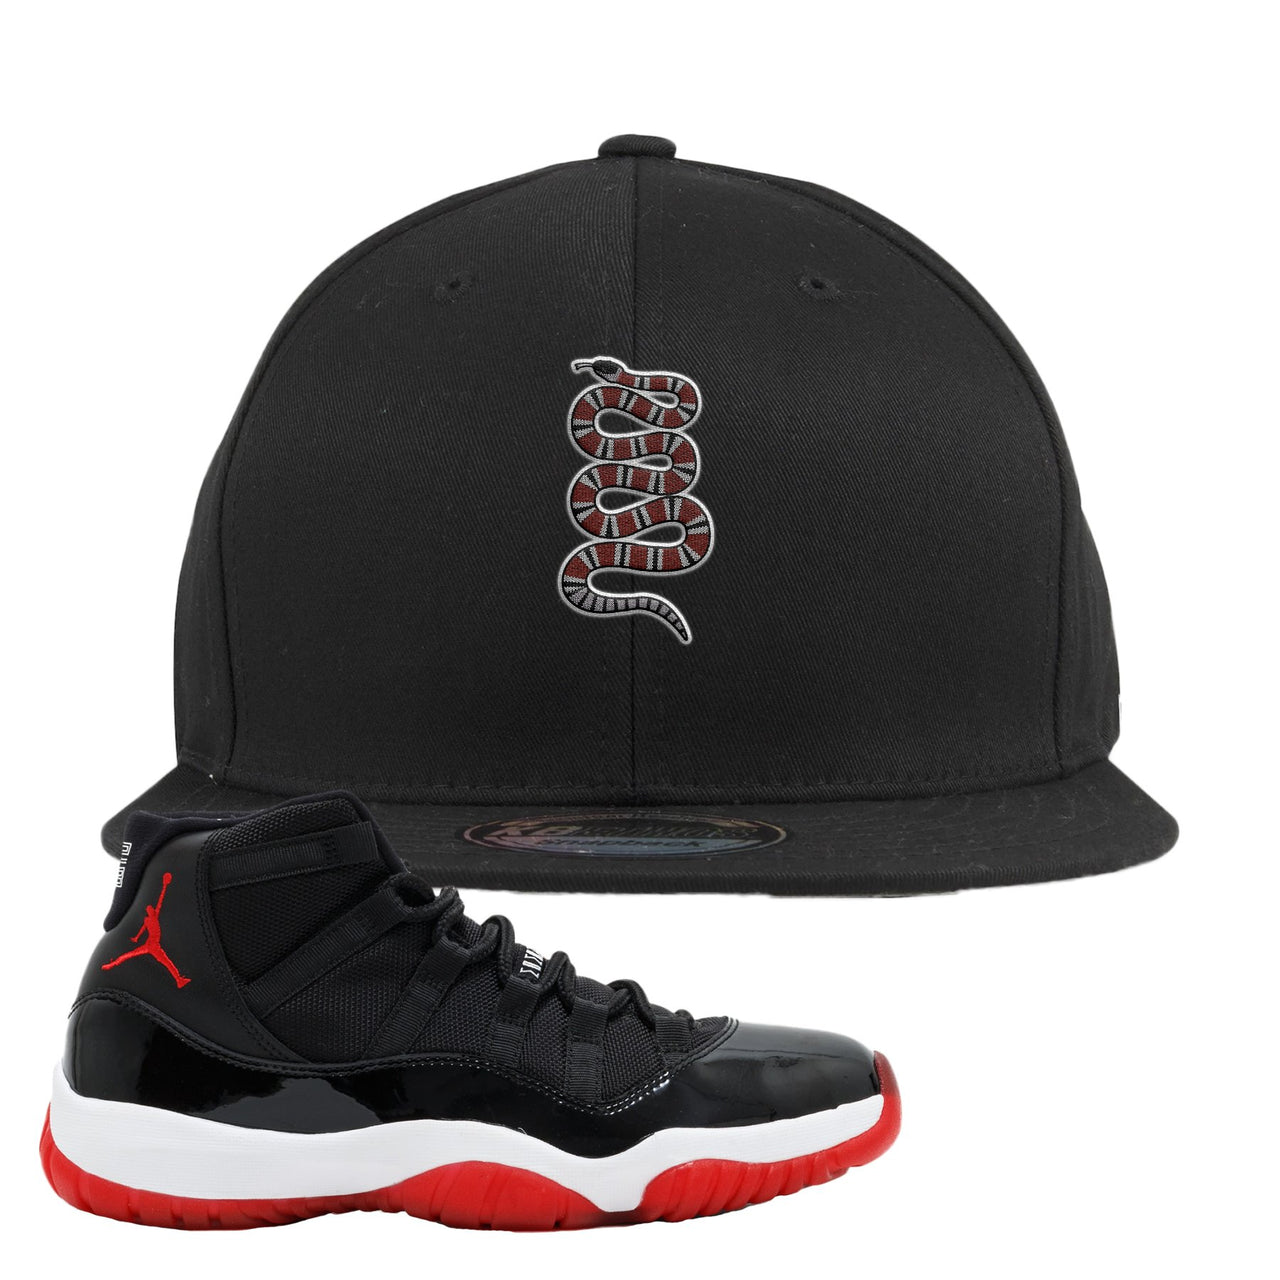 Jordan 11 Bred Coiled Snake Black Sneaker Hook Up Snapback Hat